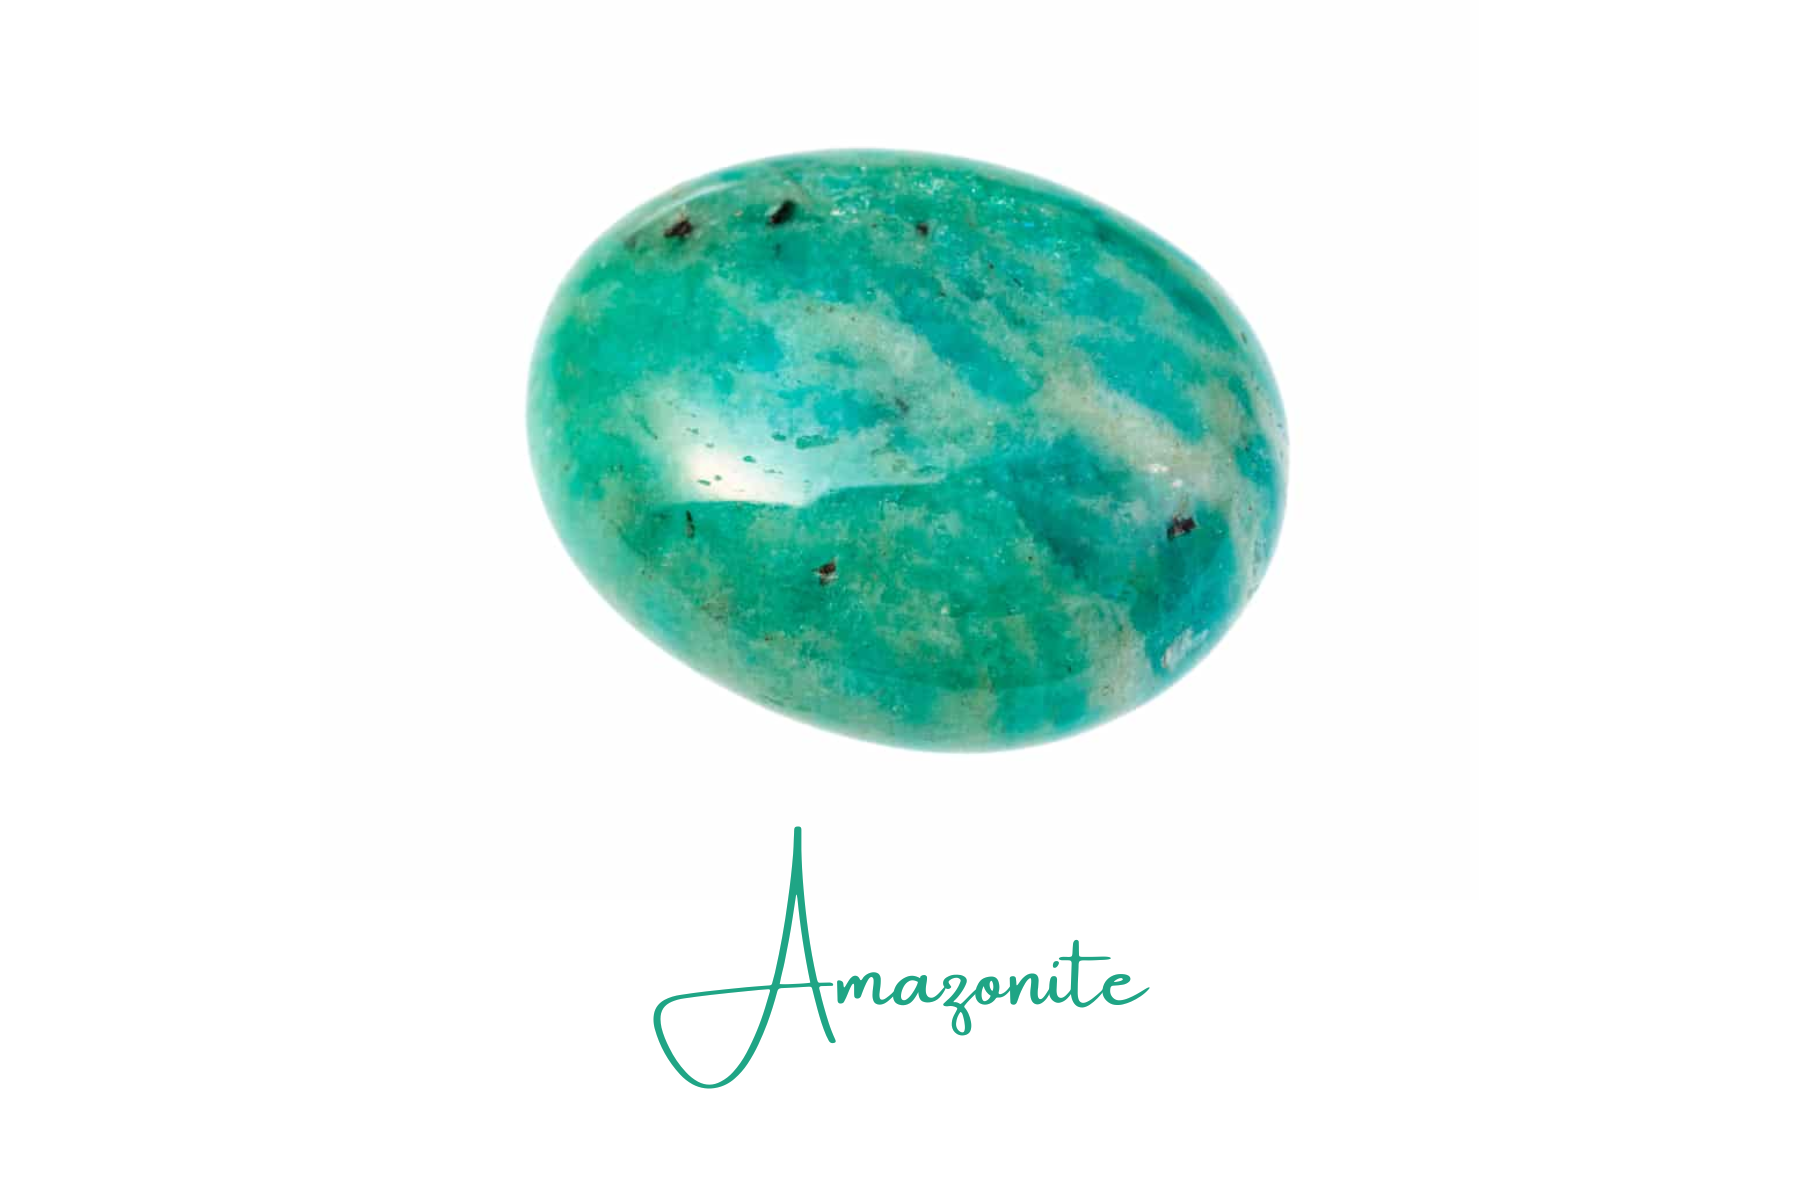 Rock-formed blue-green Amazonite stone